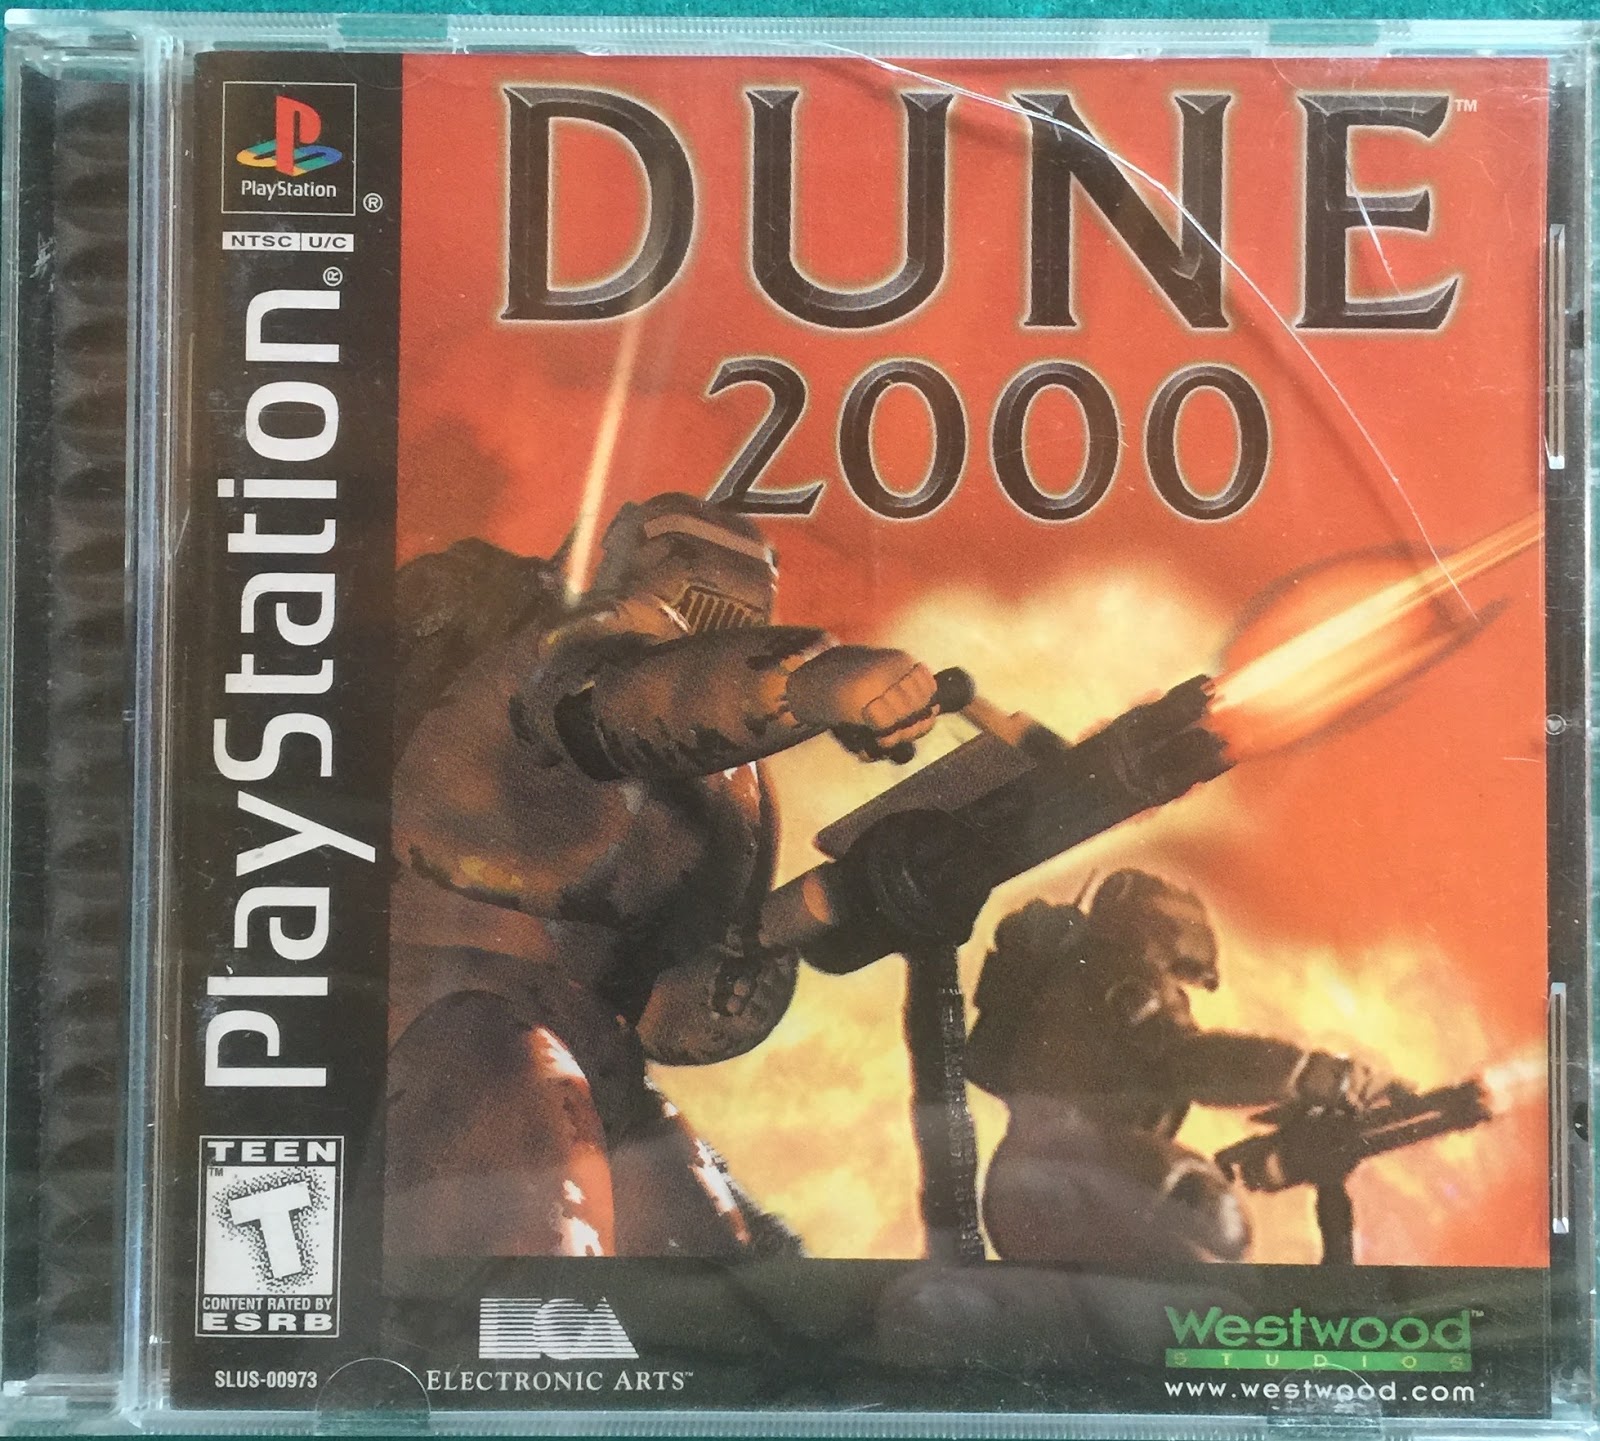 Duna 1. Dune 2000 PLAYSTATION. PLAYSTATION one Dune 2000. Dune ps1. Dune 2000 PLAYSTATION 1 обложки.